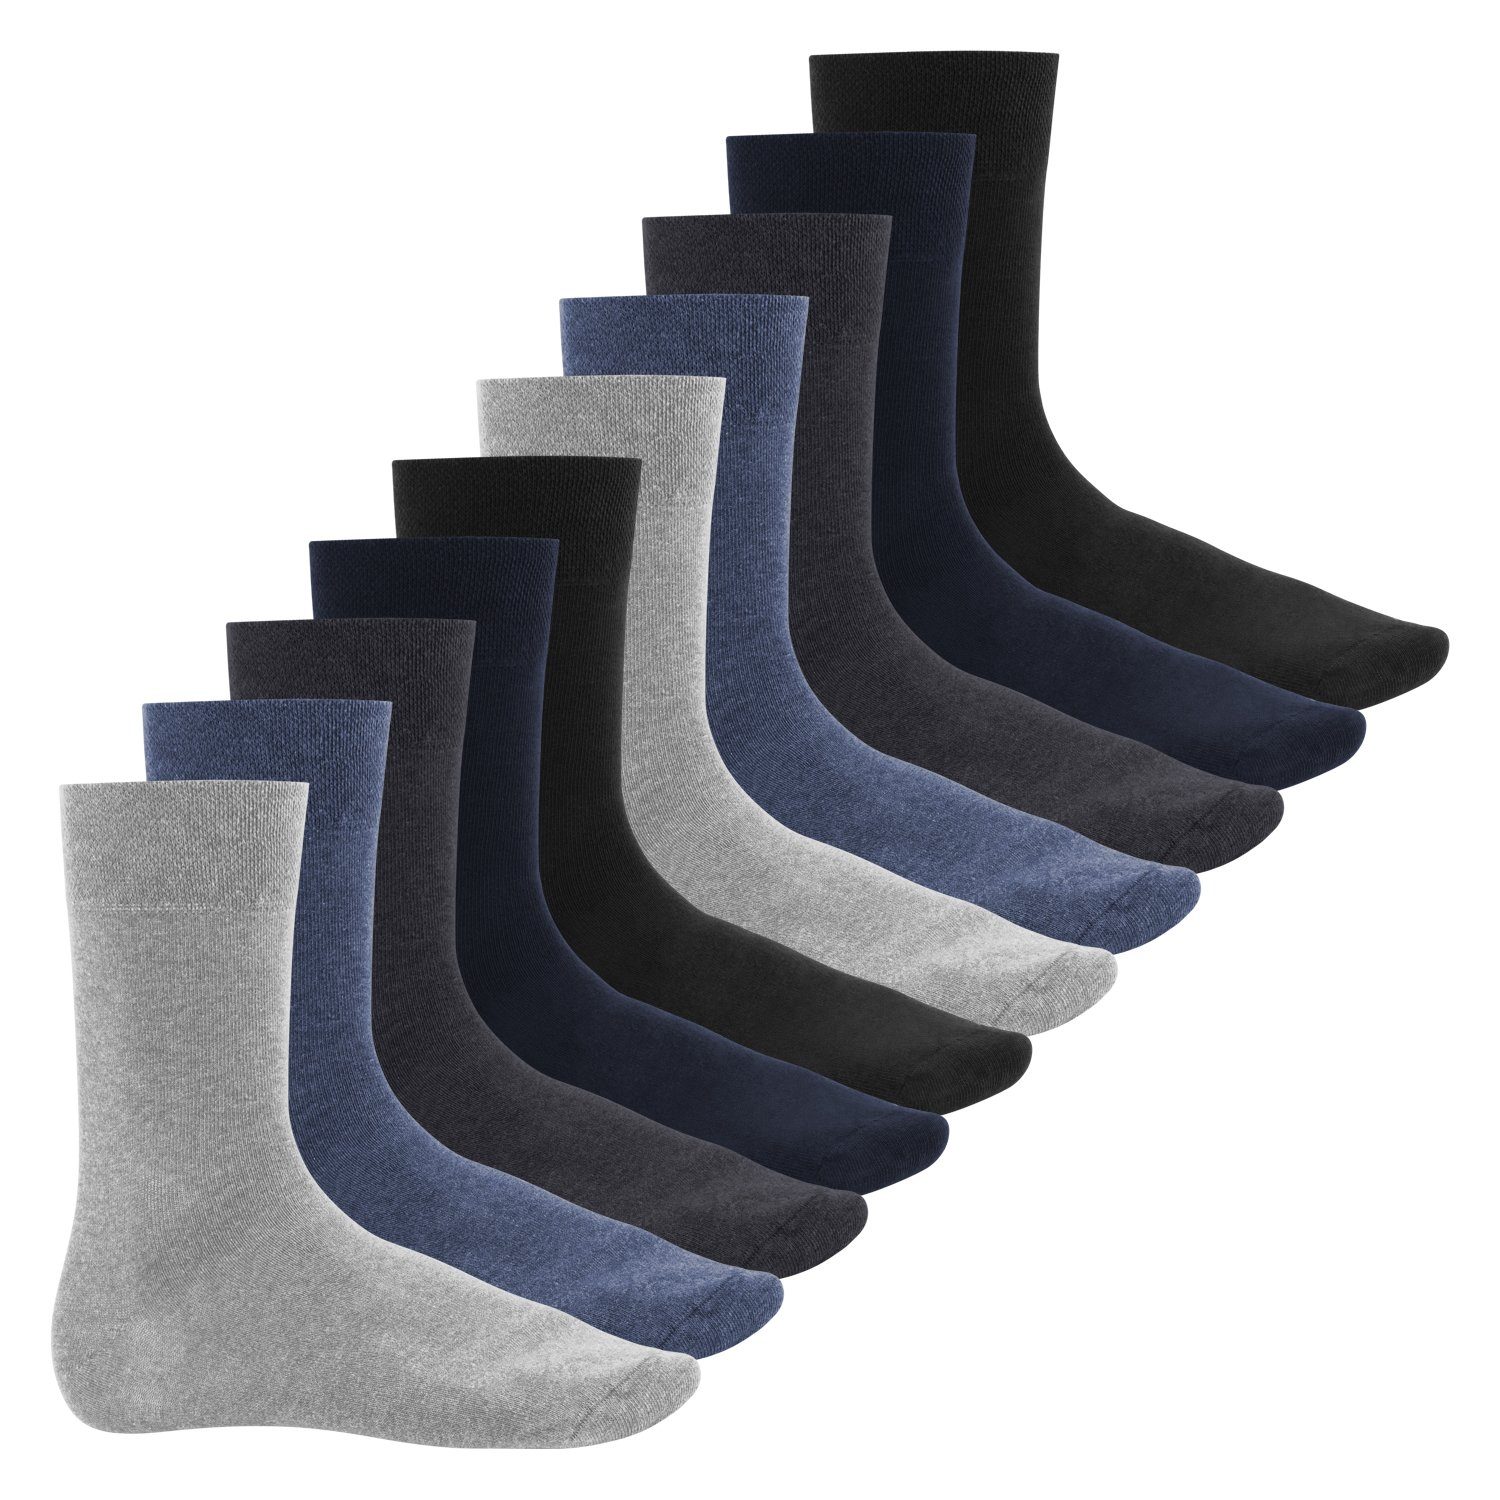 Footstar Basicsocken Herren gekettelte (10 Paar) Jeanstöne Everyday! Socken Spitze Baumwolle